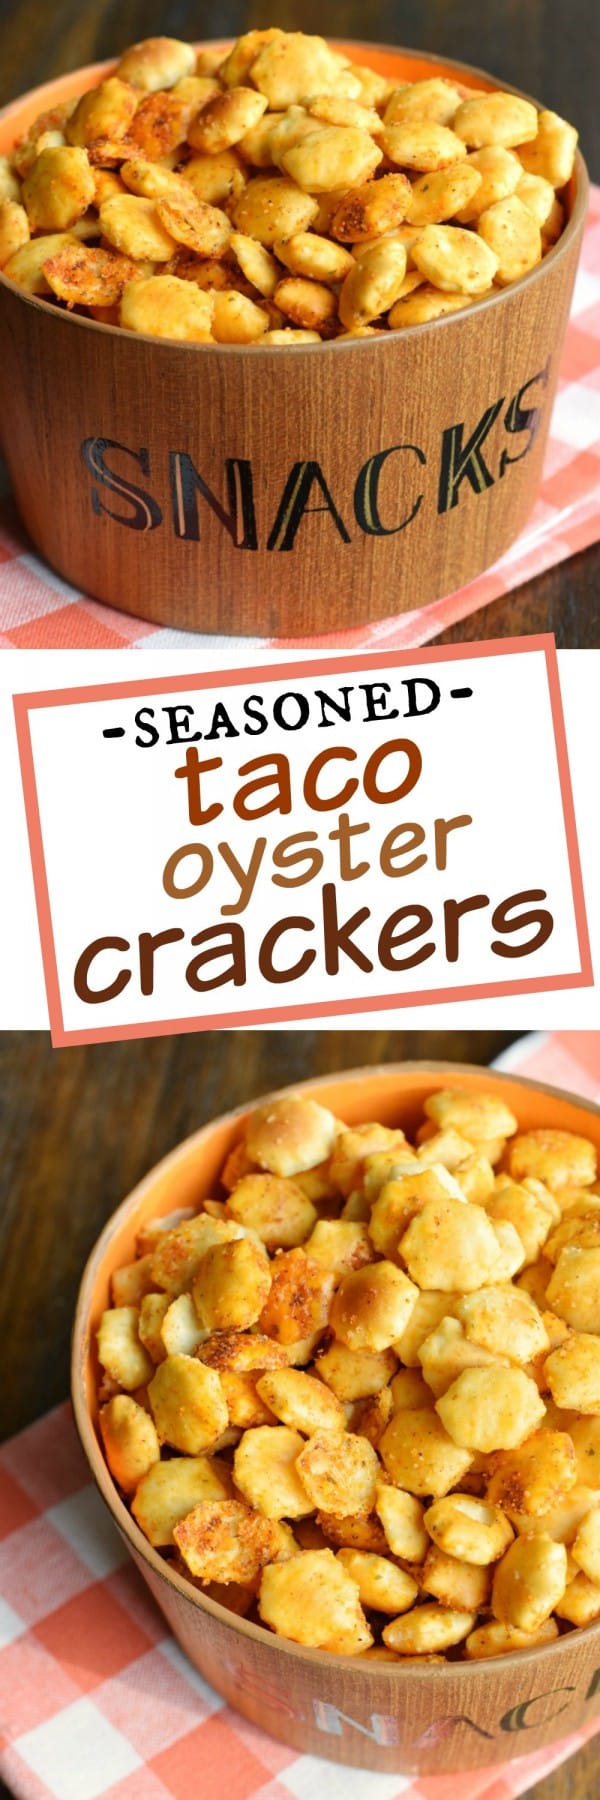 seasoned oyster crackers recipe no bake